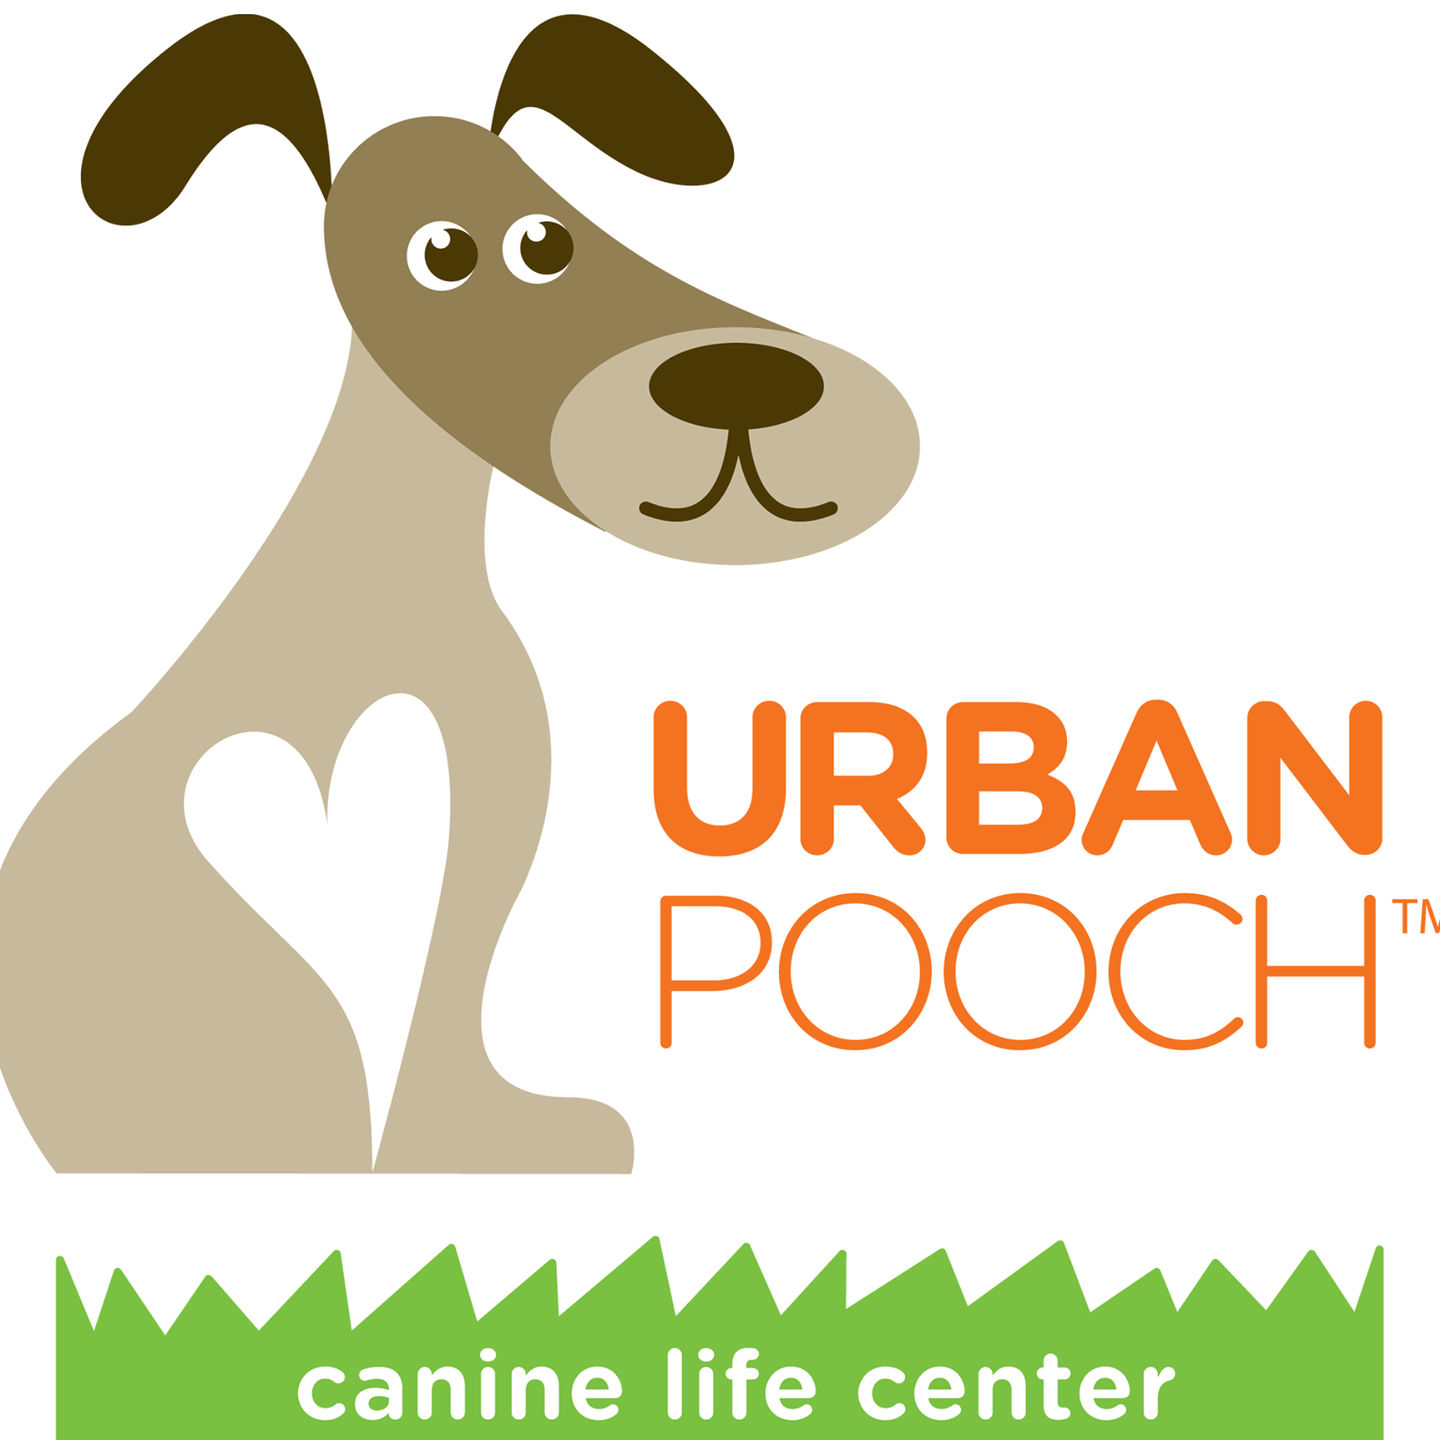 Urban Pooch Canine Life Center - Chicago, IL 60640 - (773)942-6445 | ShowMeLocal.com